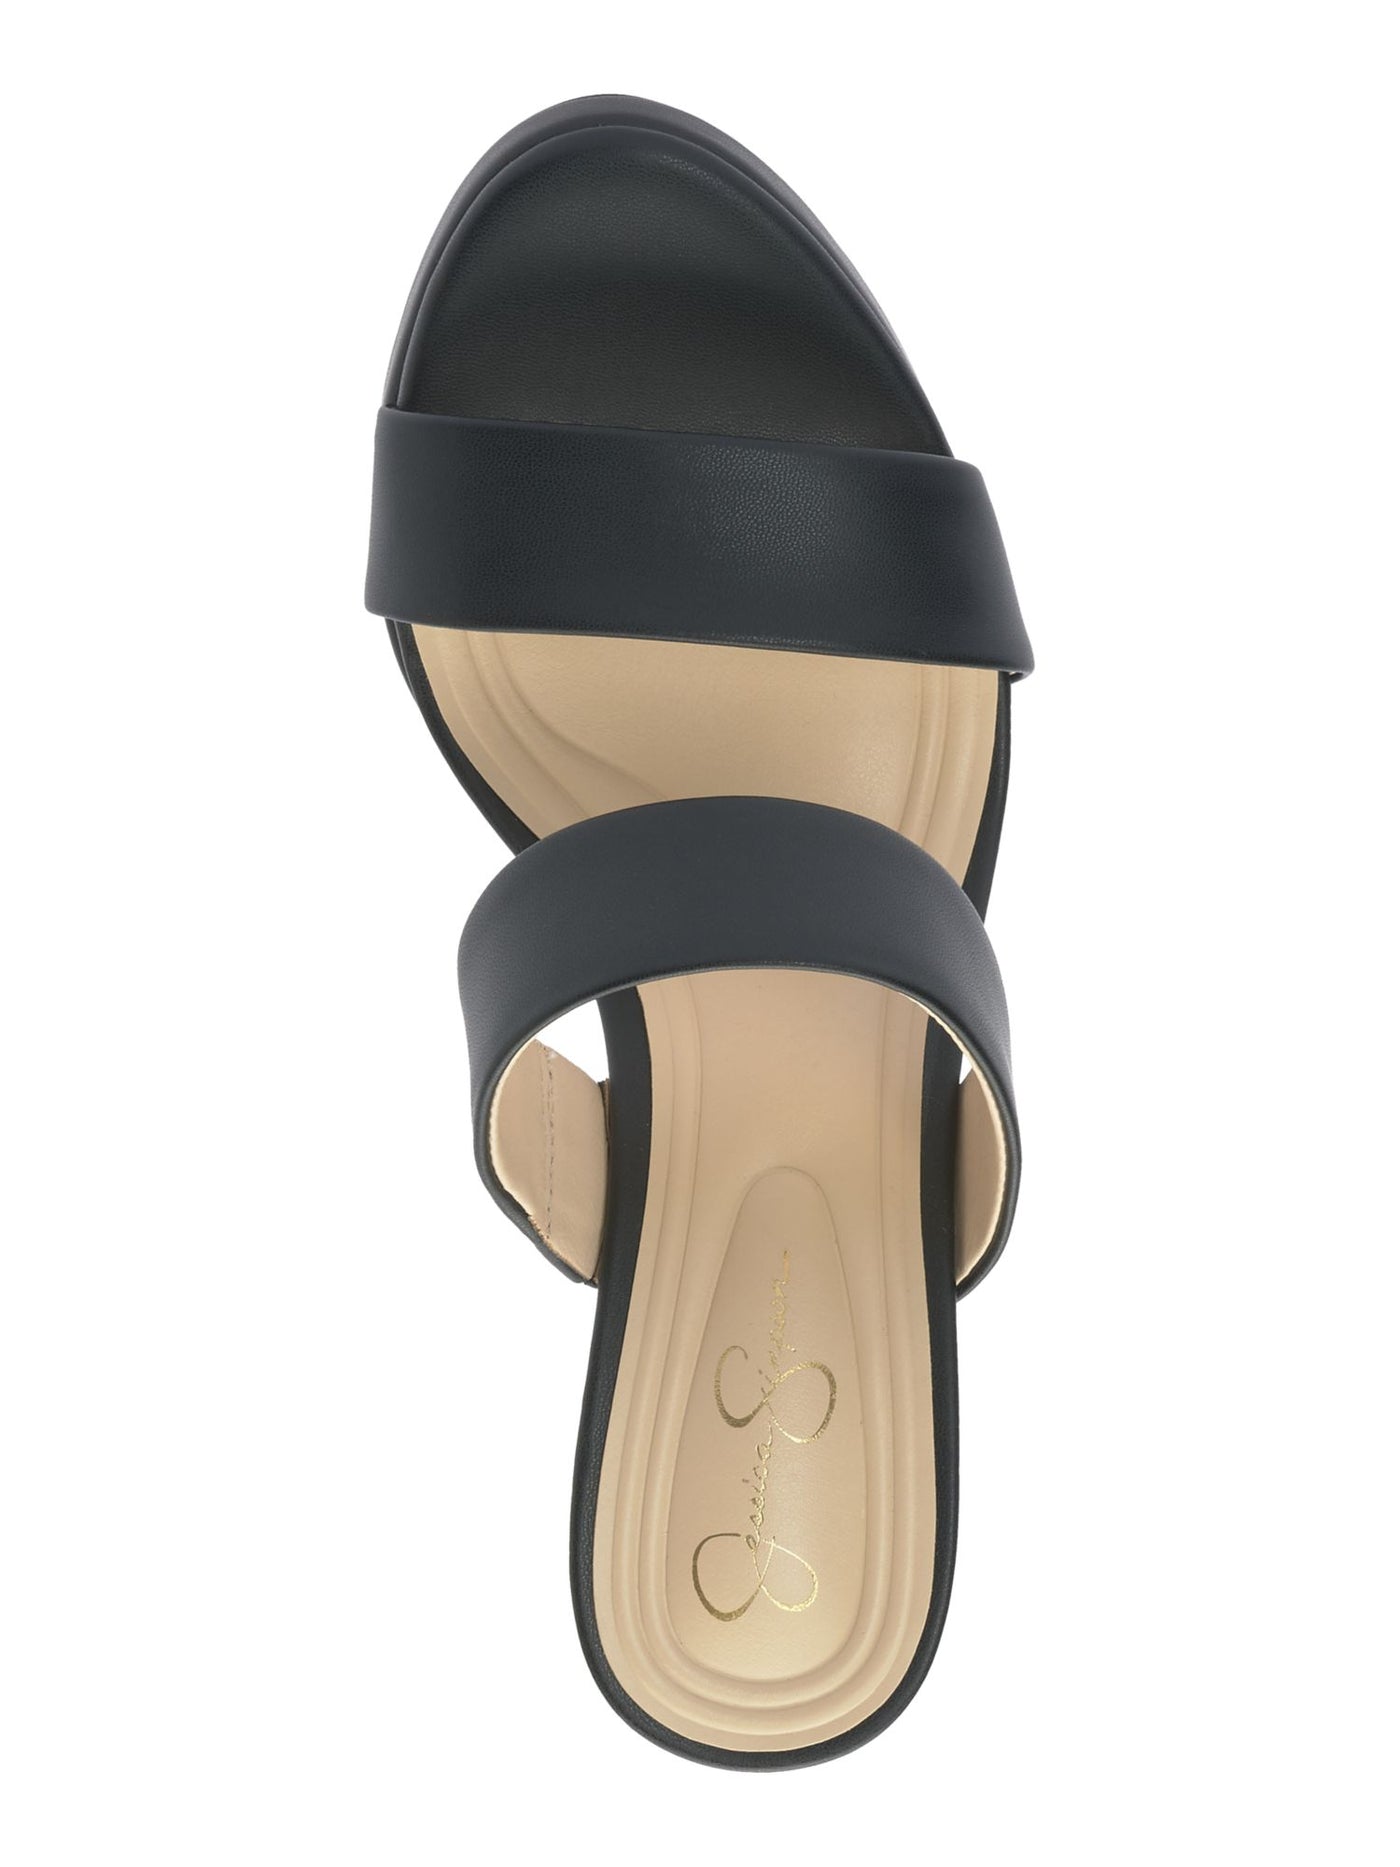 JESSICA SIMPSON Womens Black 1" Platform Goring Padded Diza Round Toe Sculpted Heel Slip On Dress Heeled Sandal 10 M